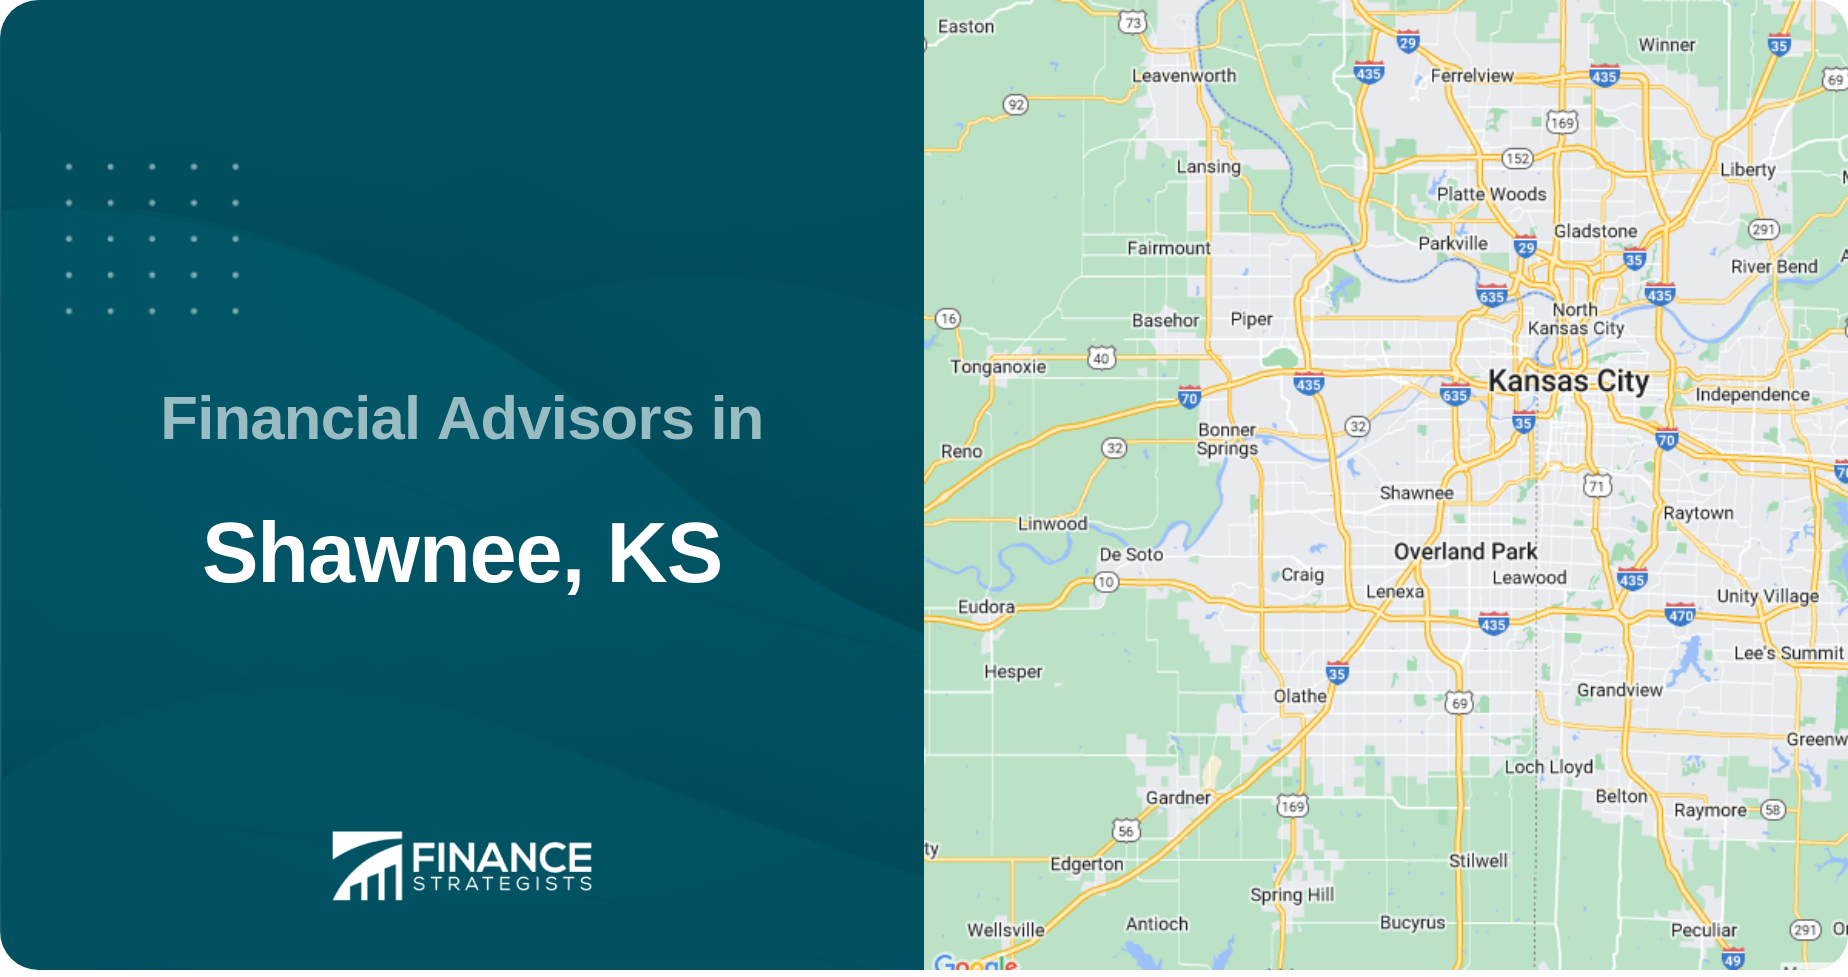 Financial Advisors in Shawnee, KS